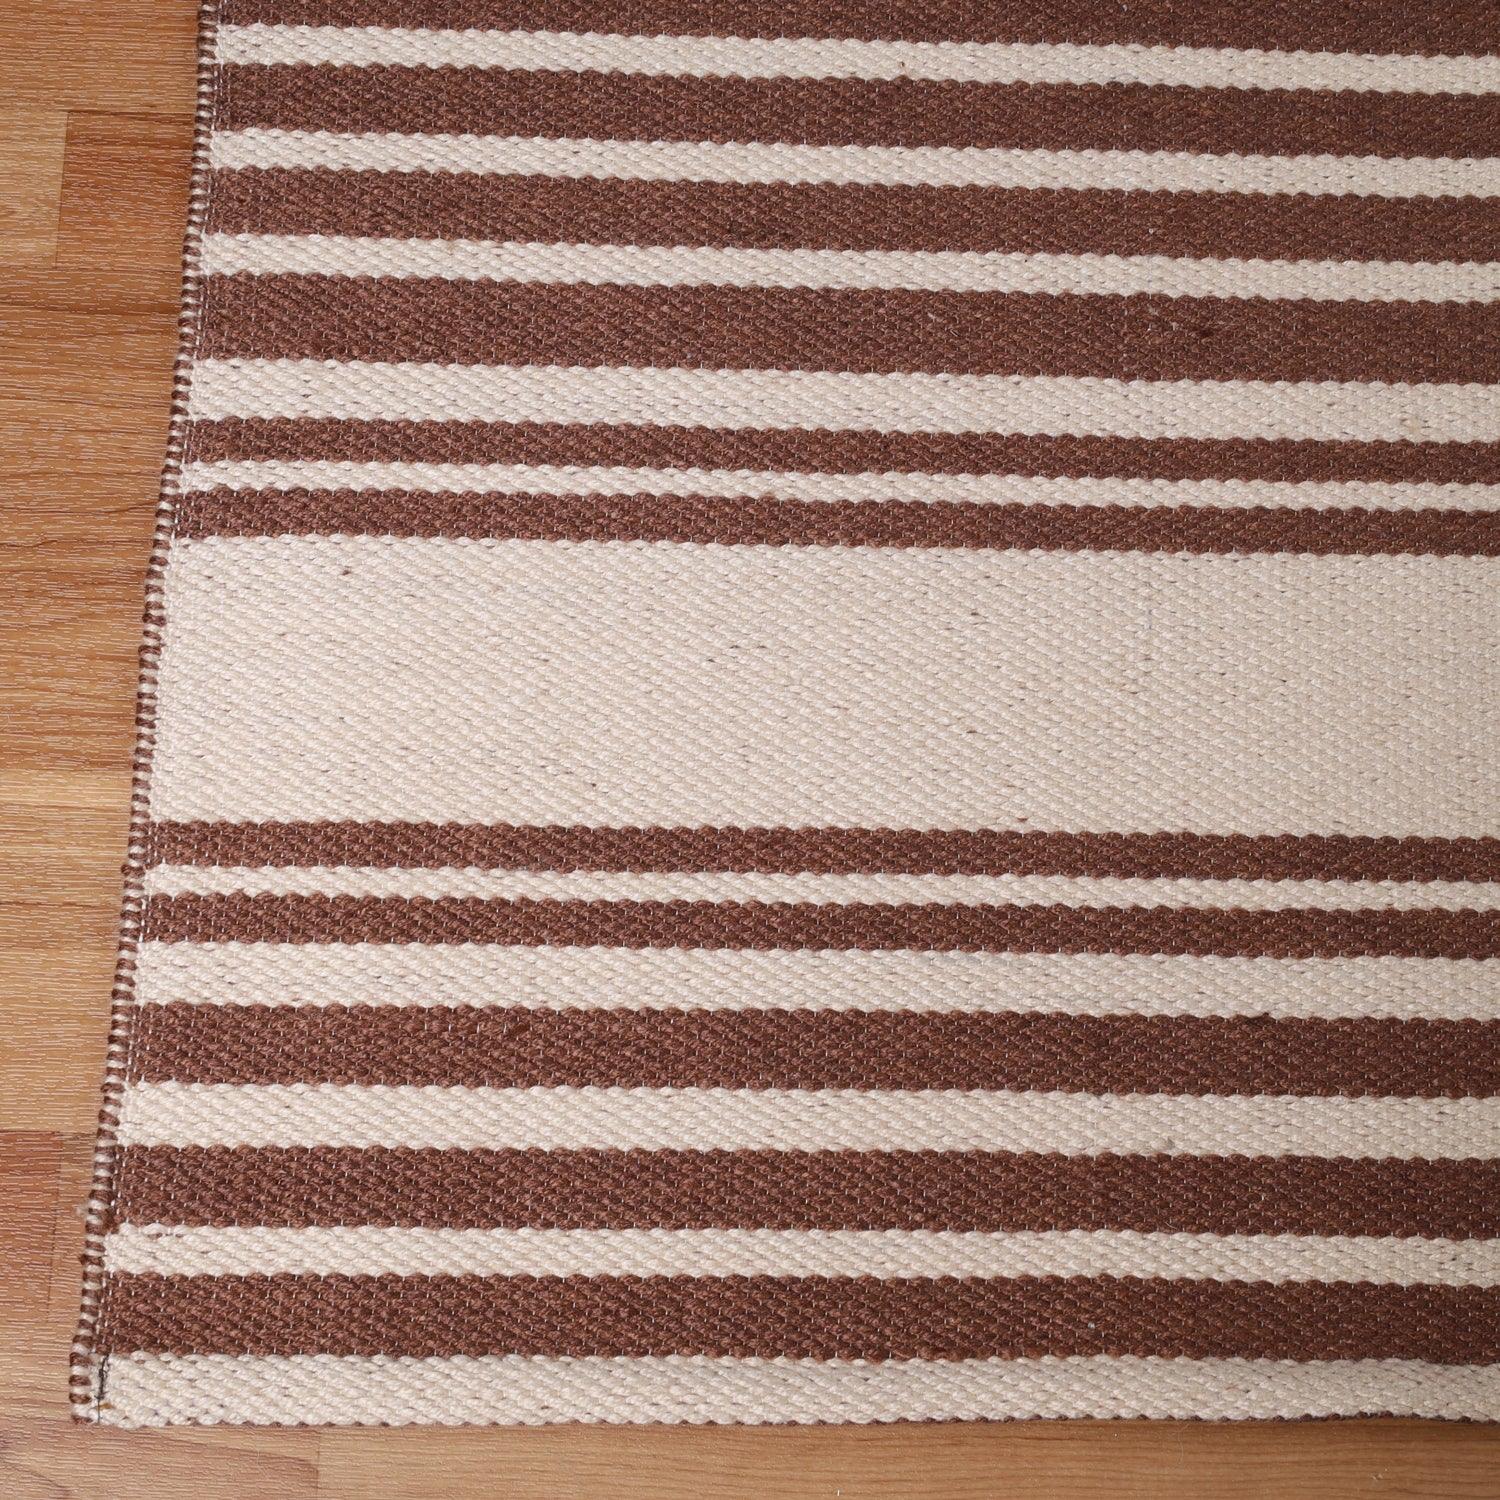  Superior Modern Stripes Large Indoor Outdoor Pattern Area Rug -  Beige